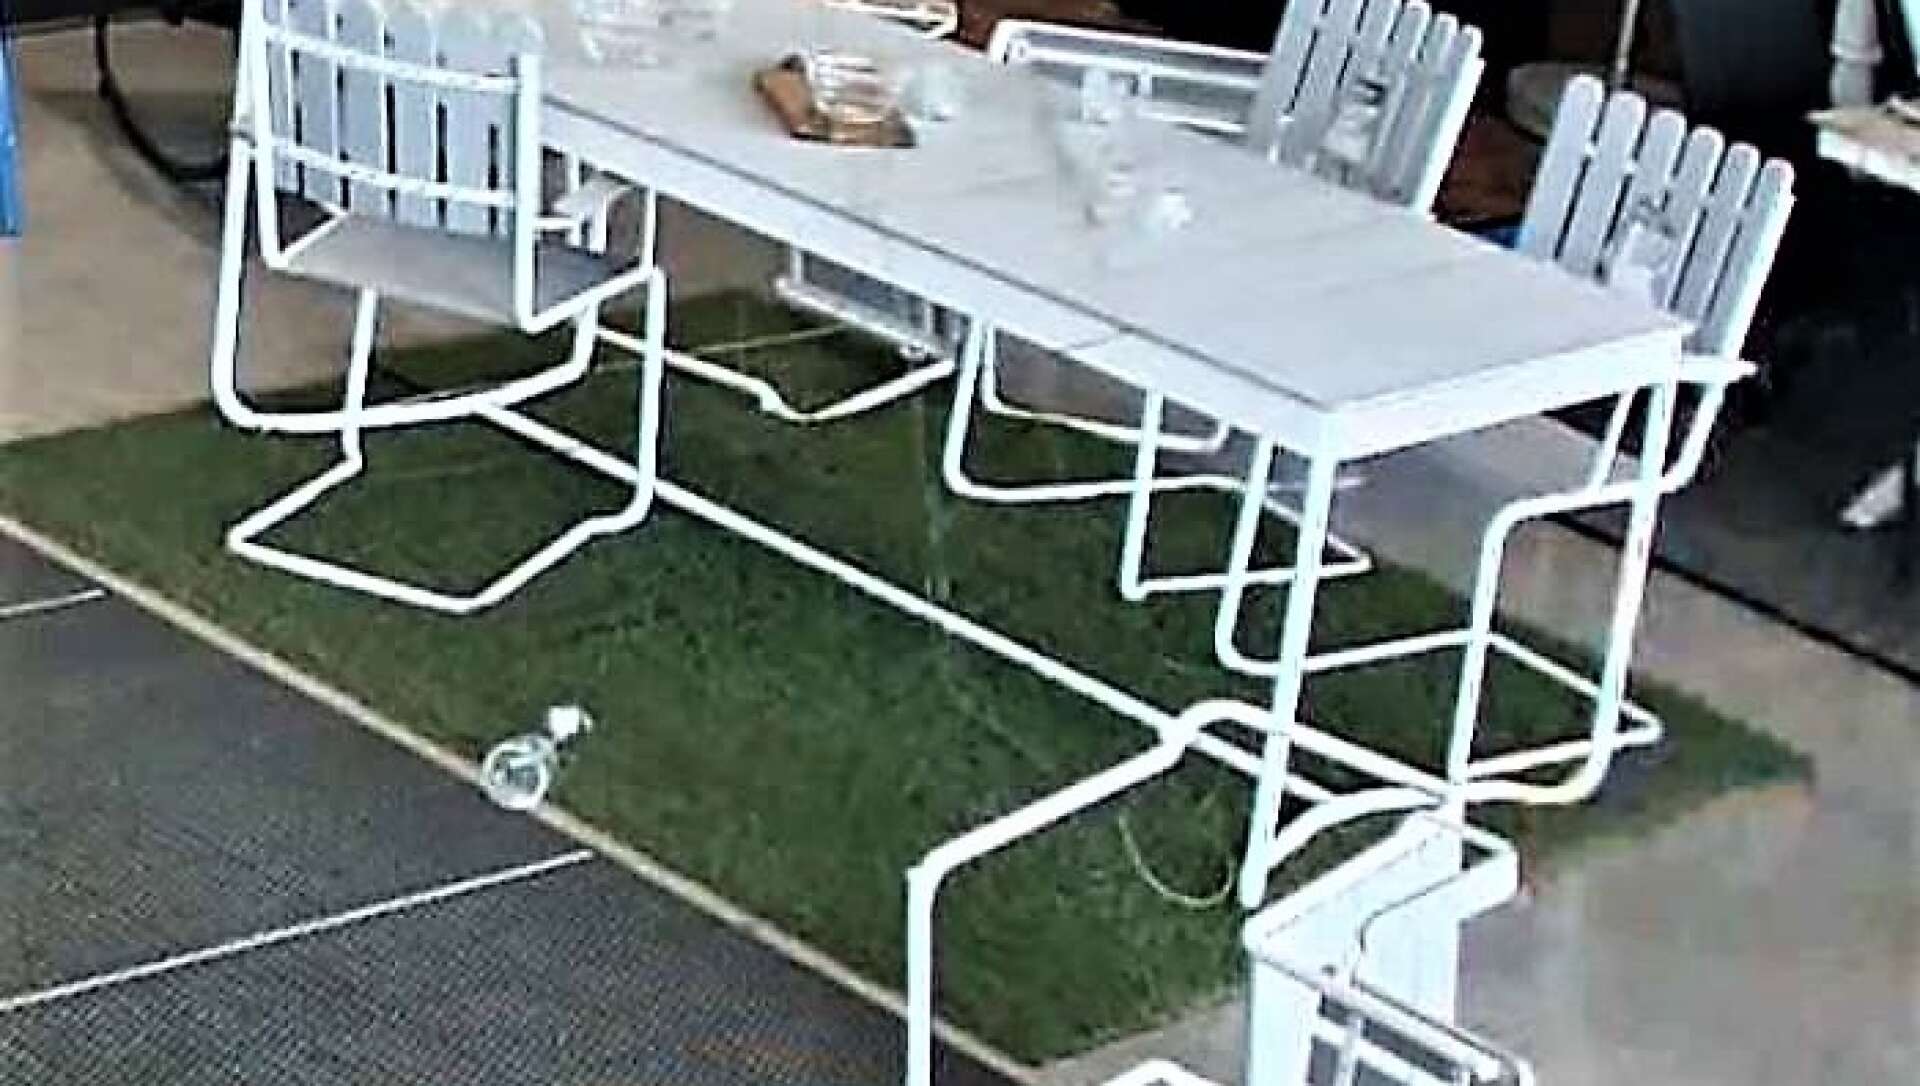 Det vandaliserade bordet på Biltema